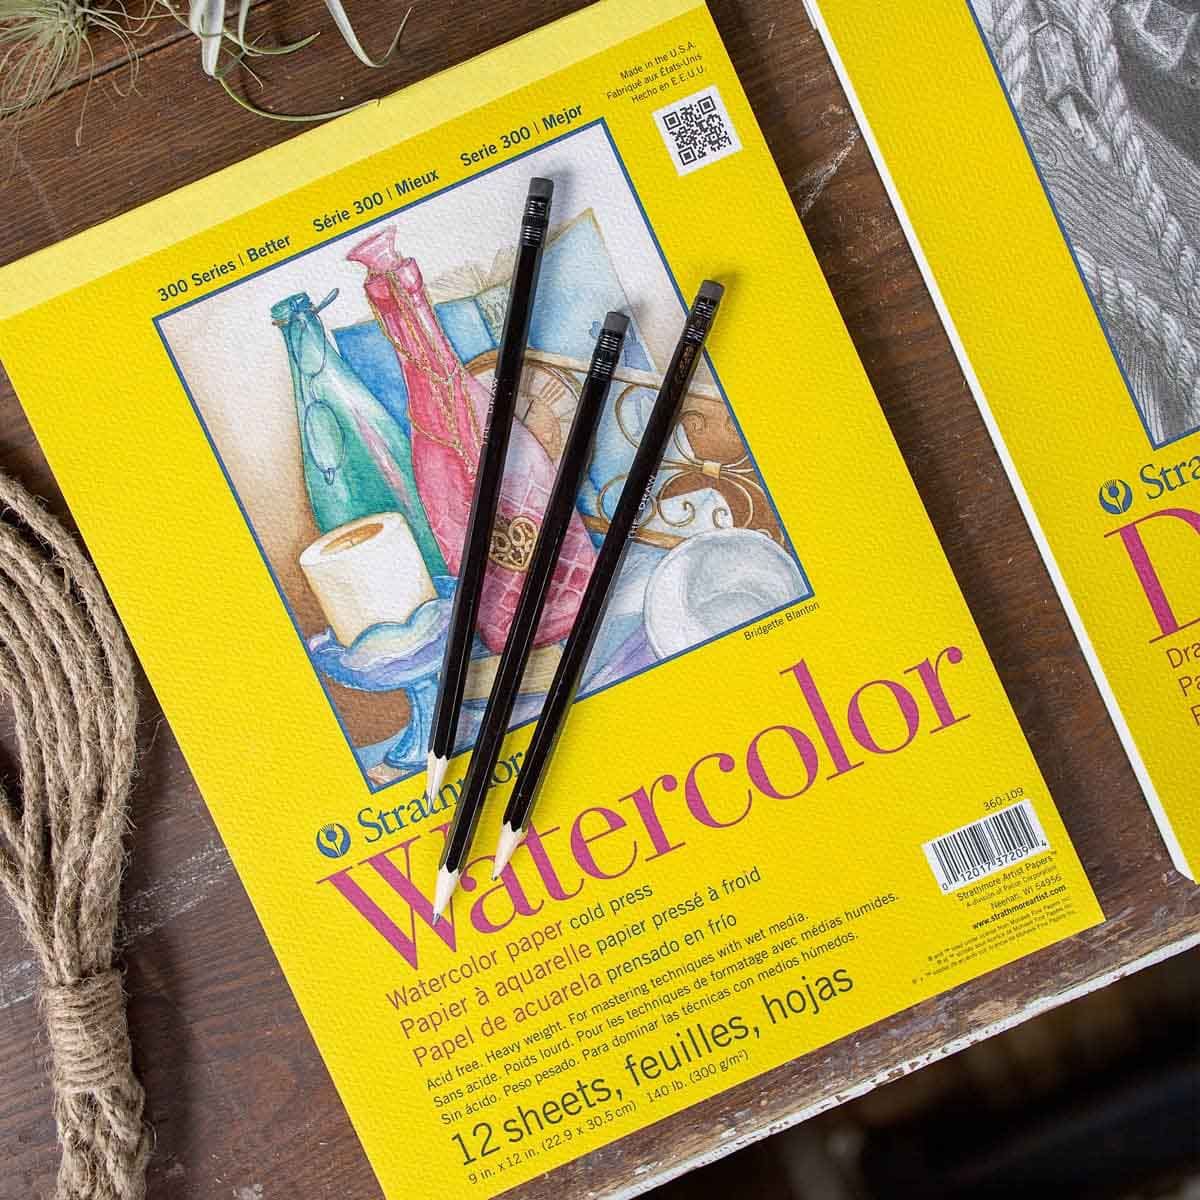 Stratmore 300 Series Watercolor Pads 11 X 15